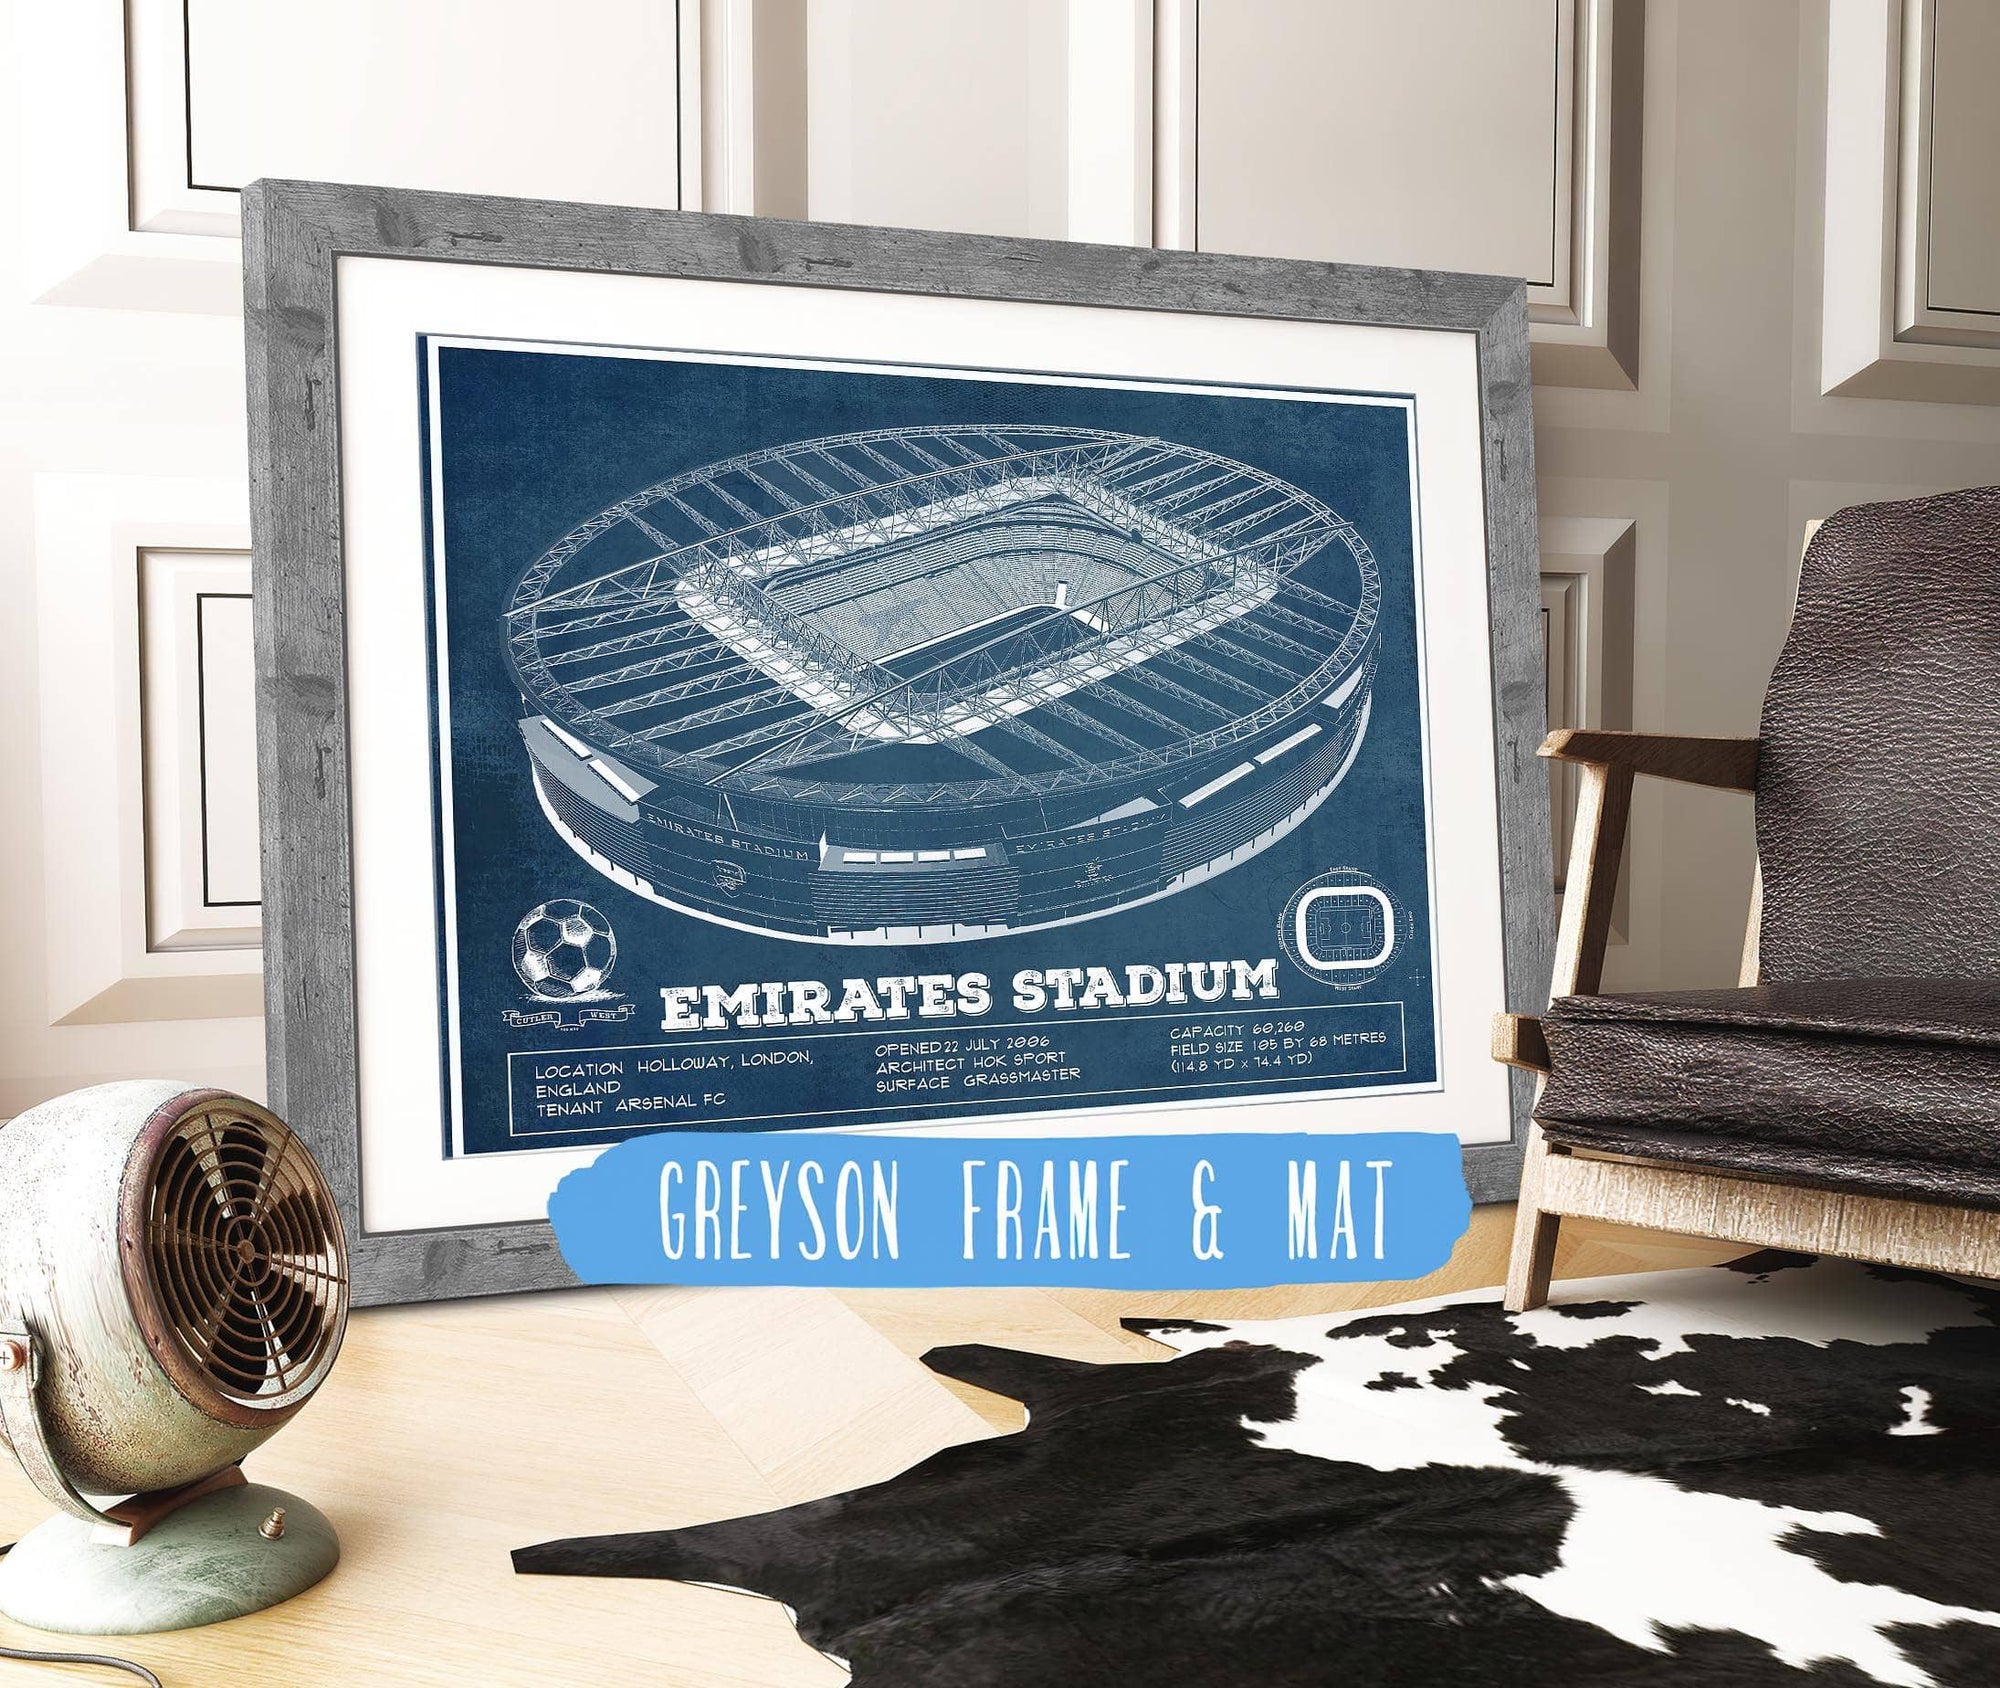 Cutler West Soccer Collection 14" x 11" / Greyson Frame & Mat Arsenal Football Club - Emirates Stadium Soccer Print 235353086